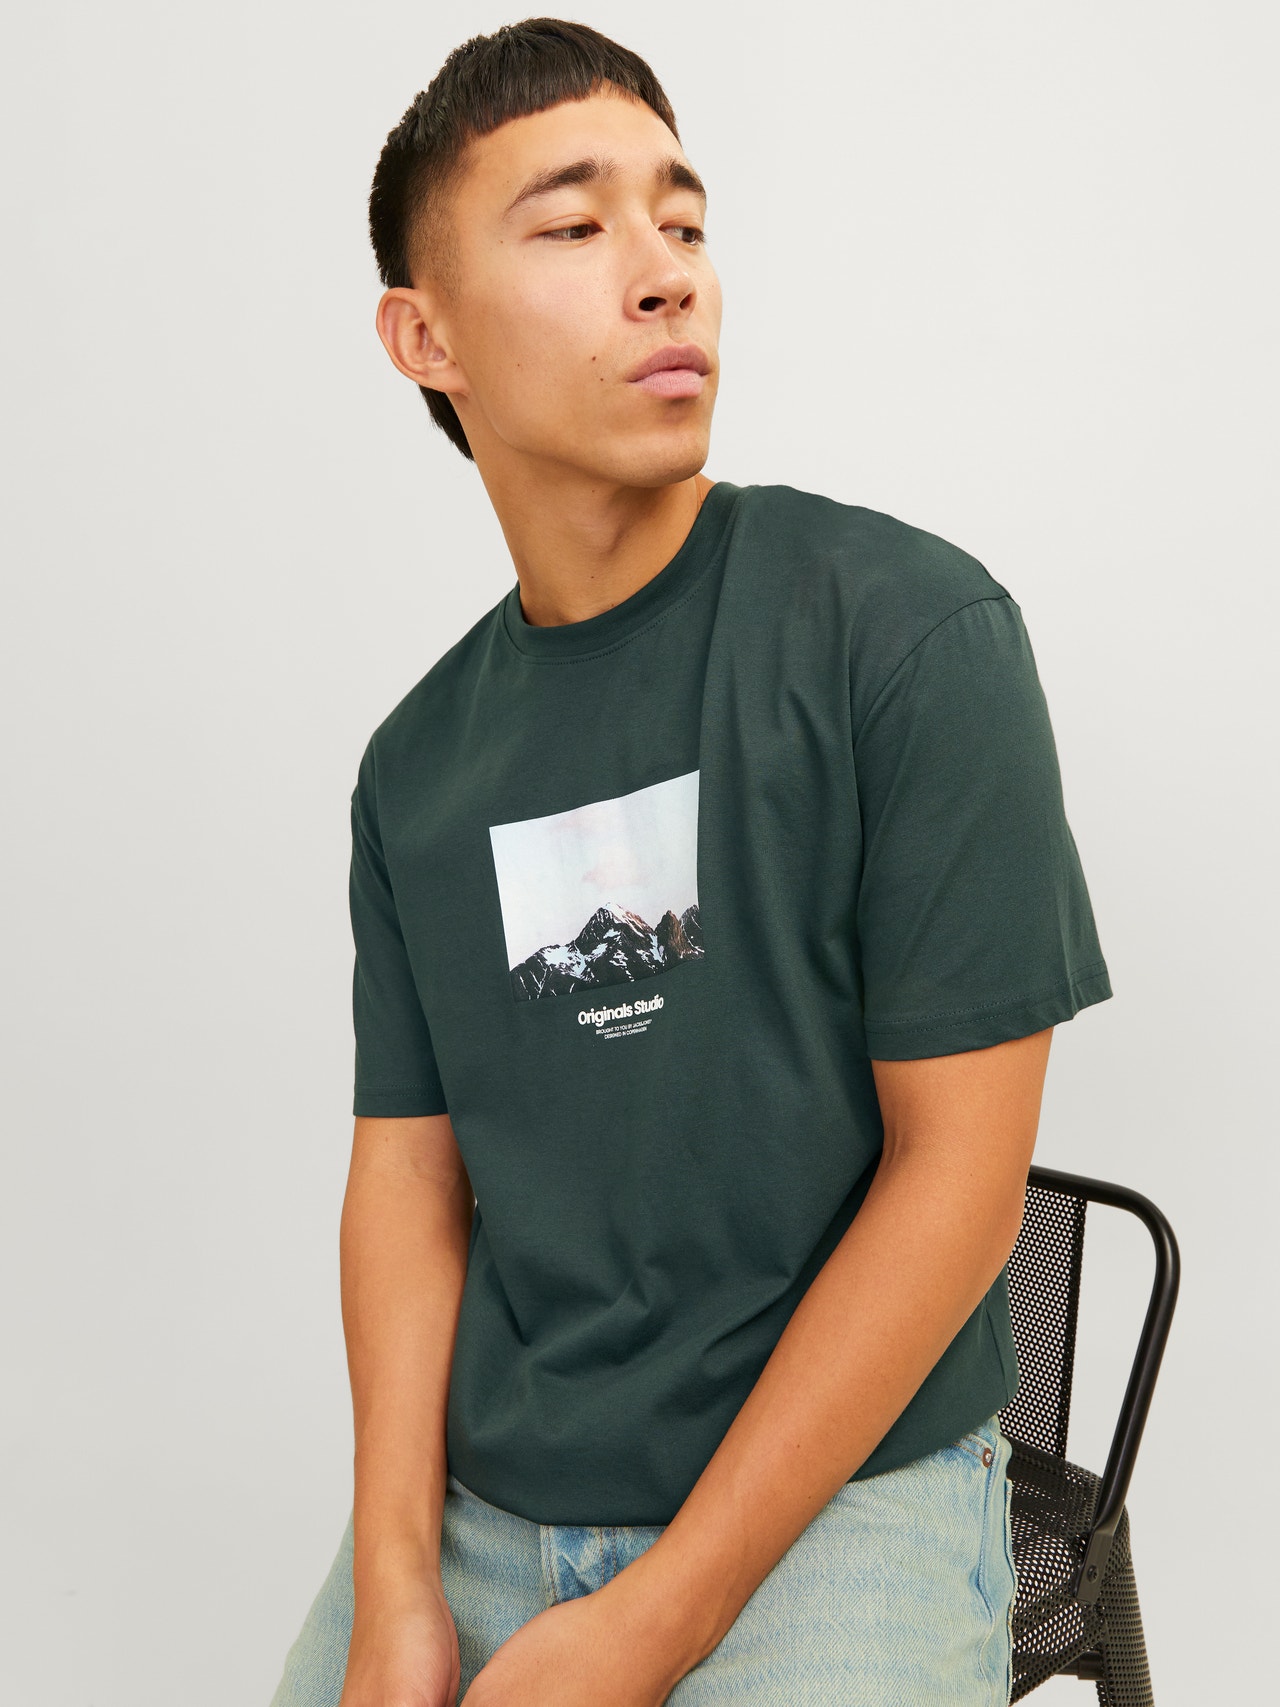 Jack & Jones Printed Crew neck T-shirt -Forest River - 12250421